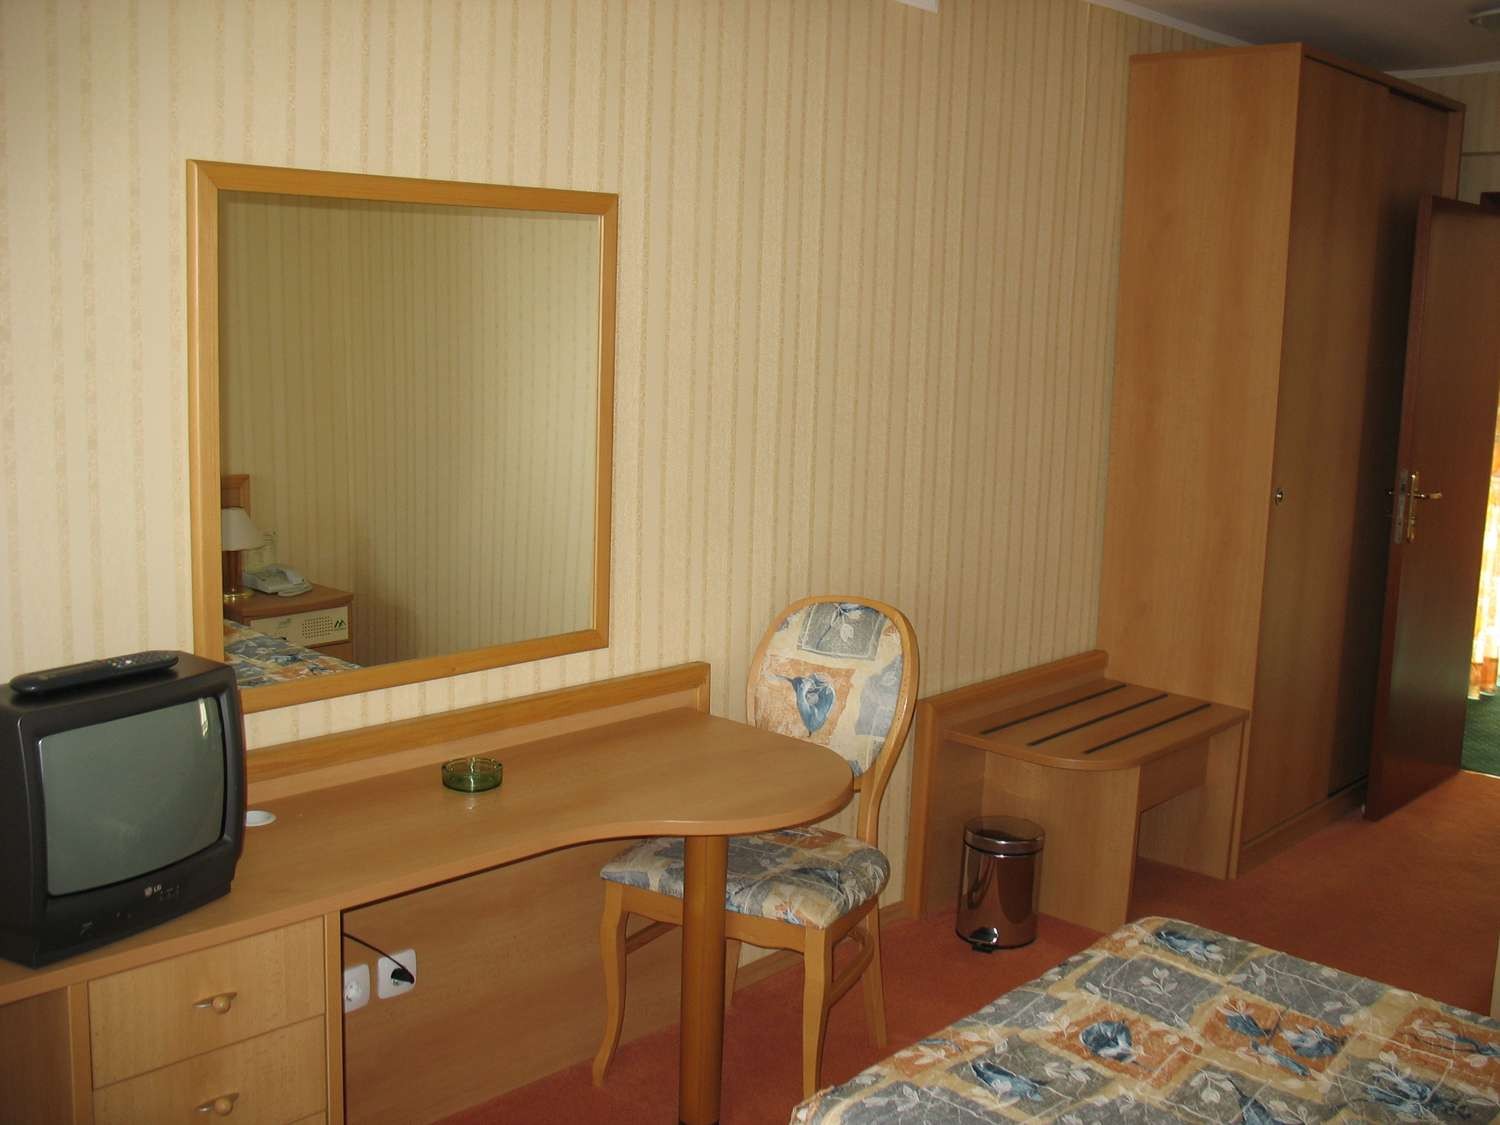 2 bedroom Apart, Grand Hotel Murgavets 4*